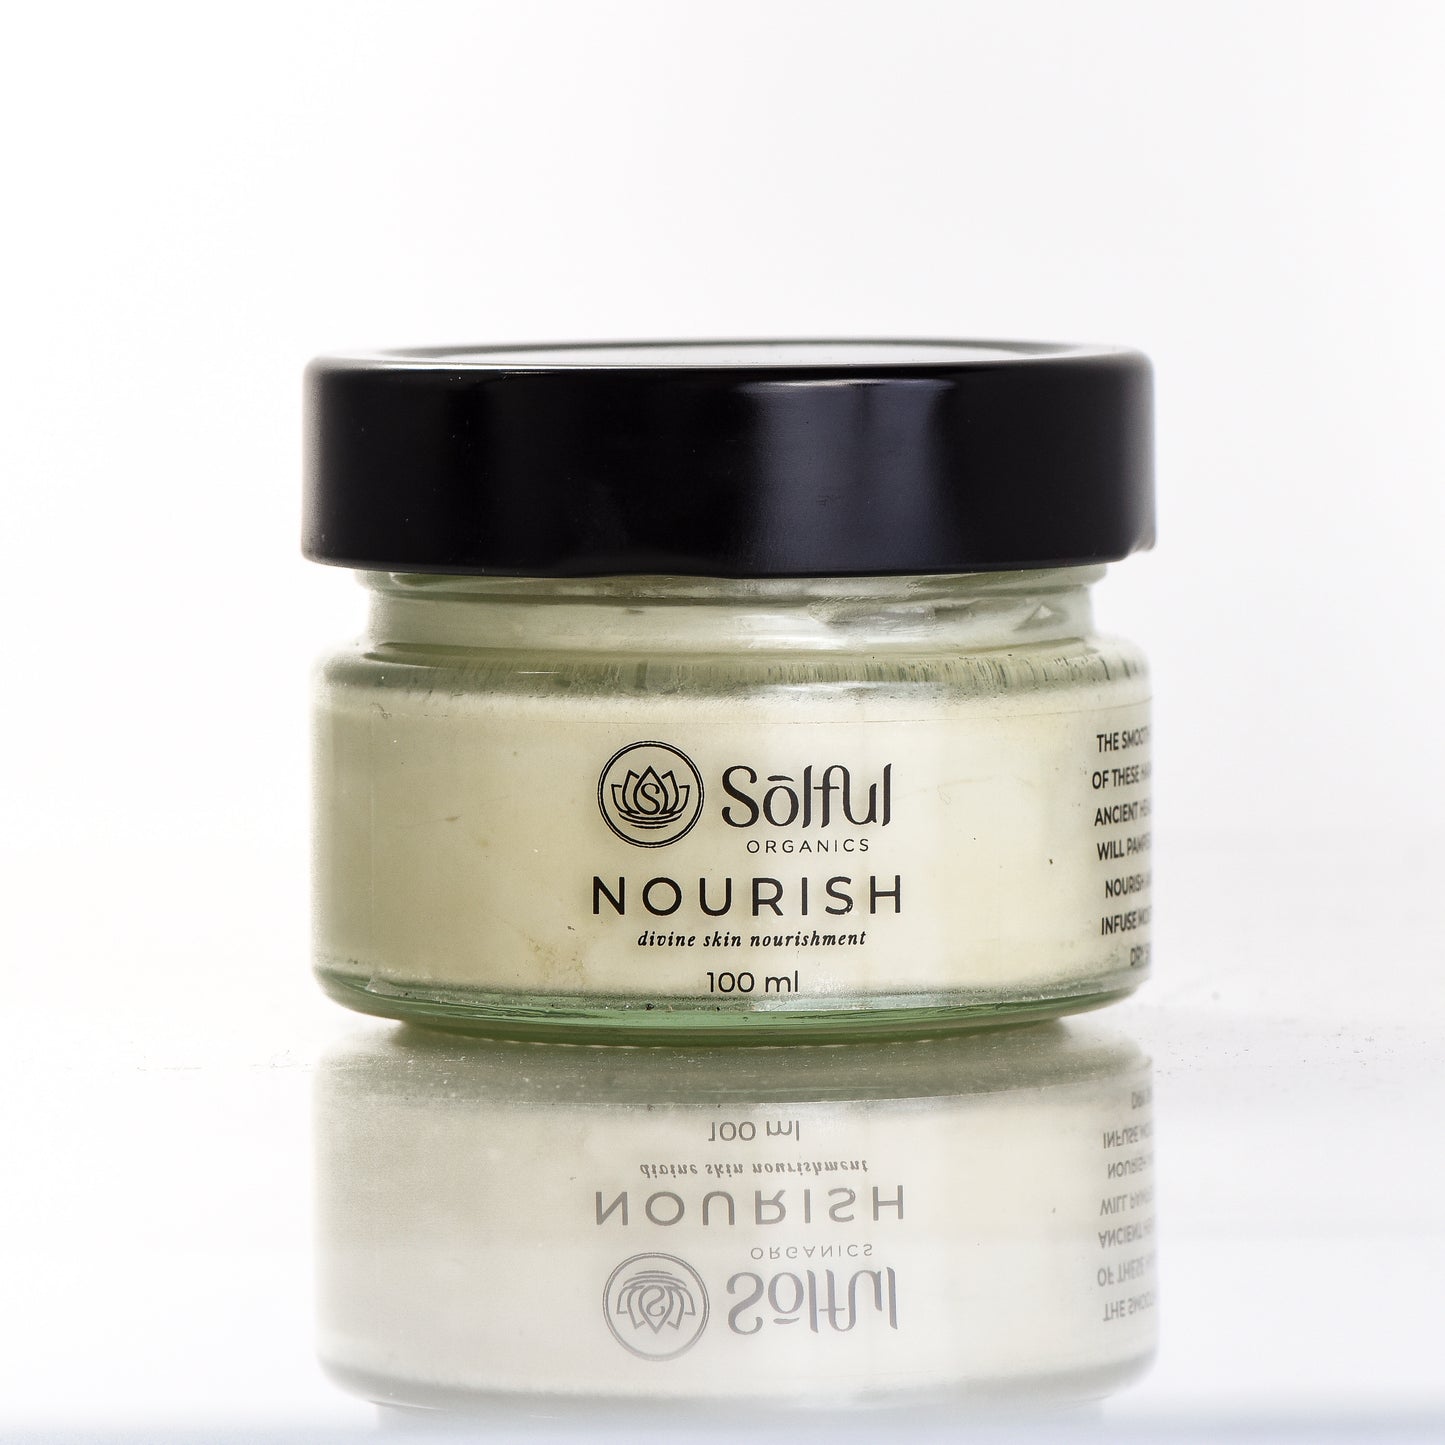 Solful Organics Nourish – for divine skin nourishment